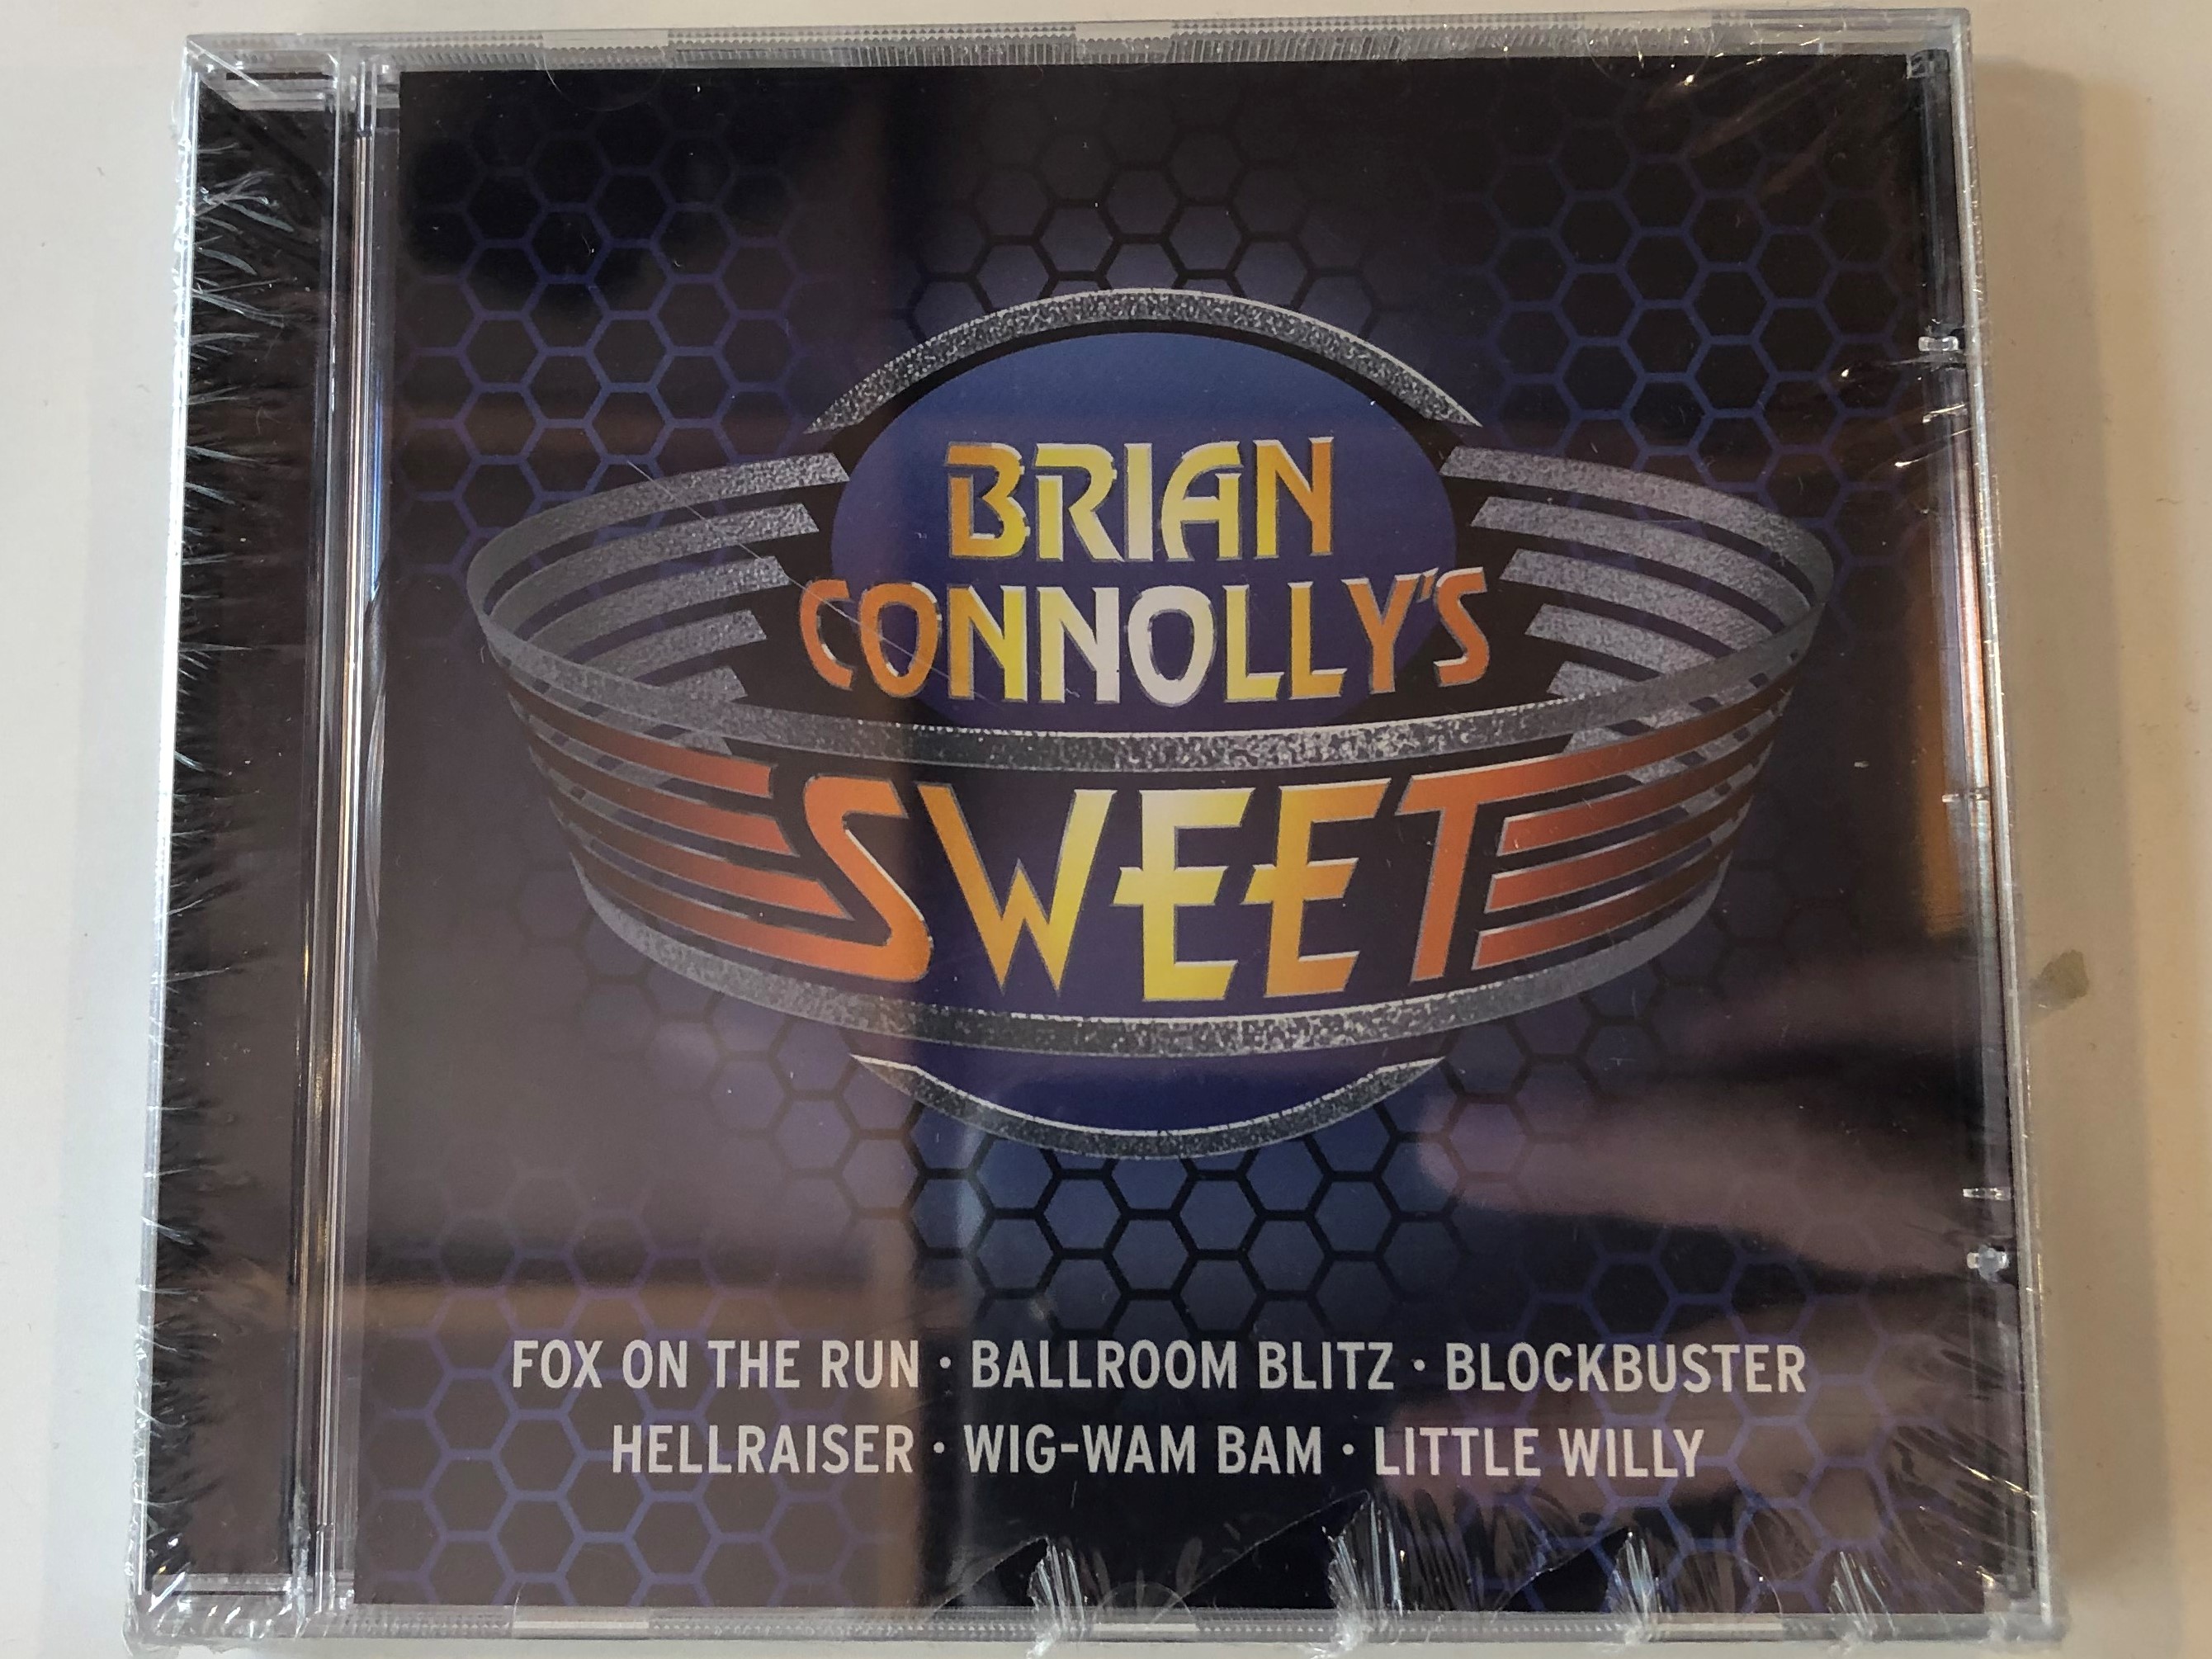 brian-connolly-s-sweet-fox-on-the-run-ballroom-blitz-blockbuster-hellraiser-wig-wam-bam-little-willy-eurotrend-audio-cd-cd-142-1-.jpg